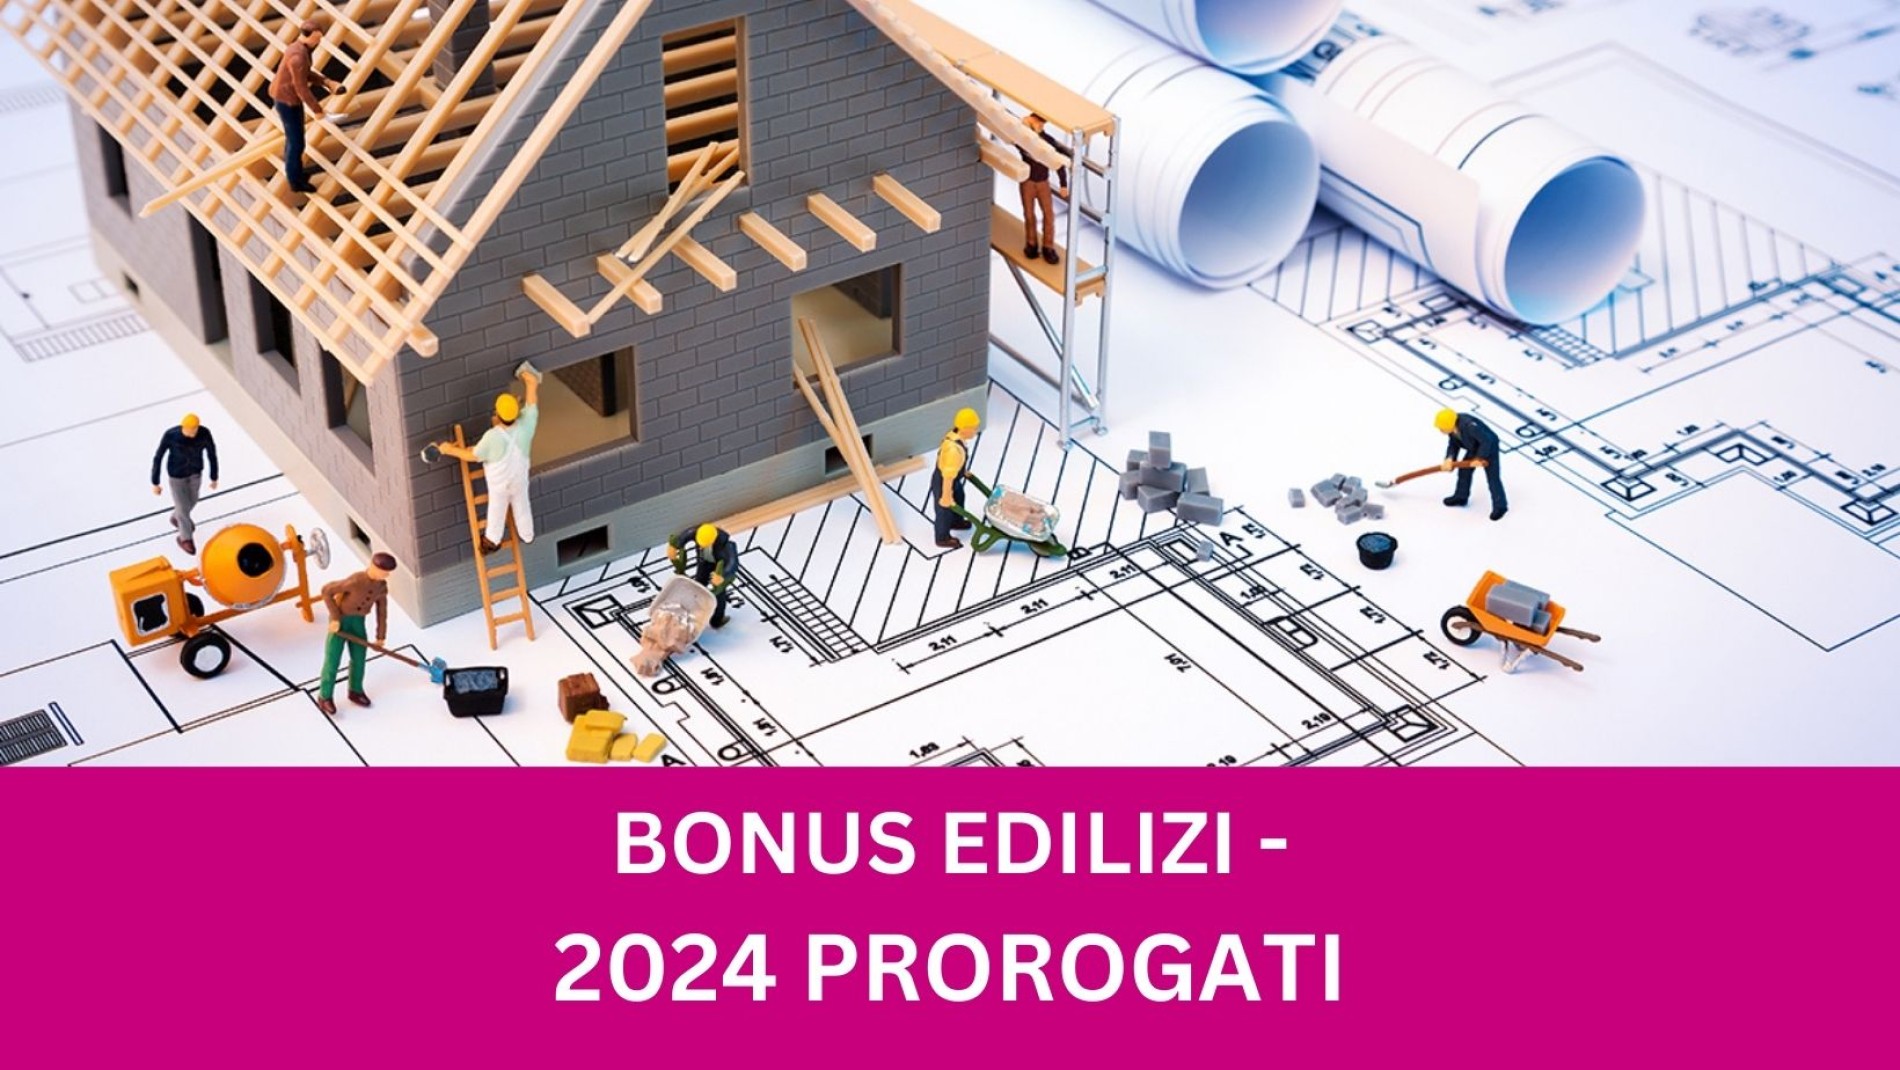 2024 PROROGATI - BONUS EDILIZI 